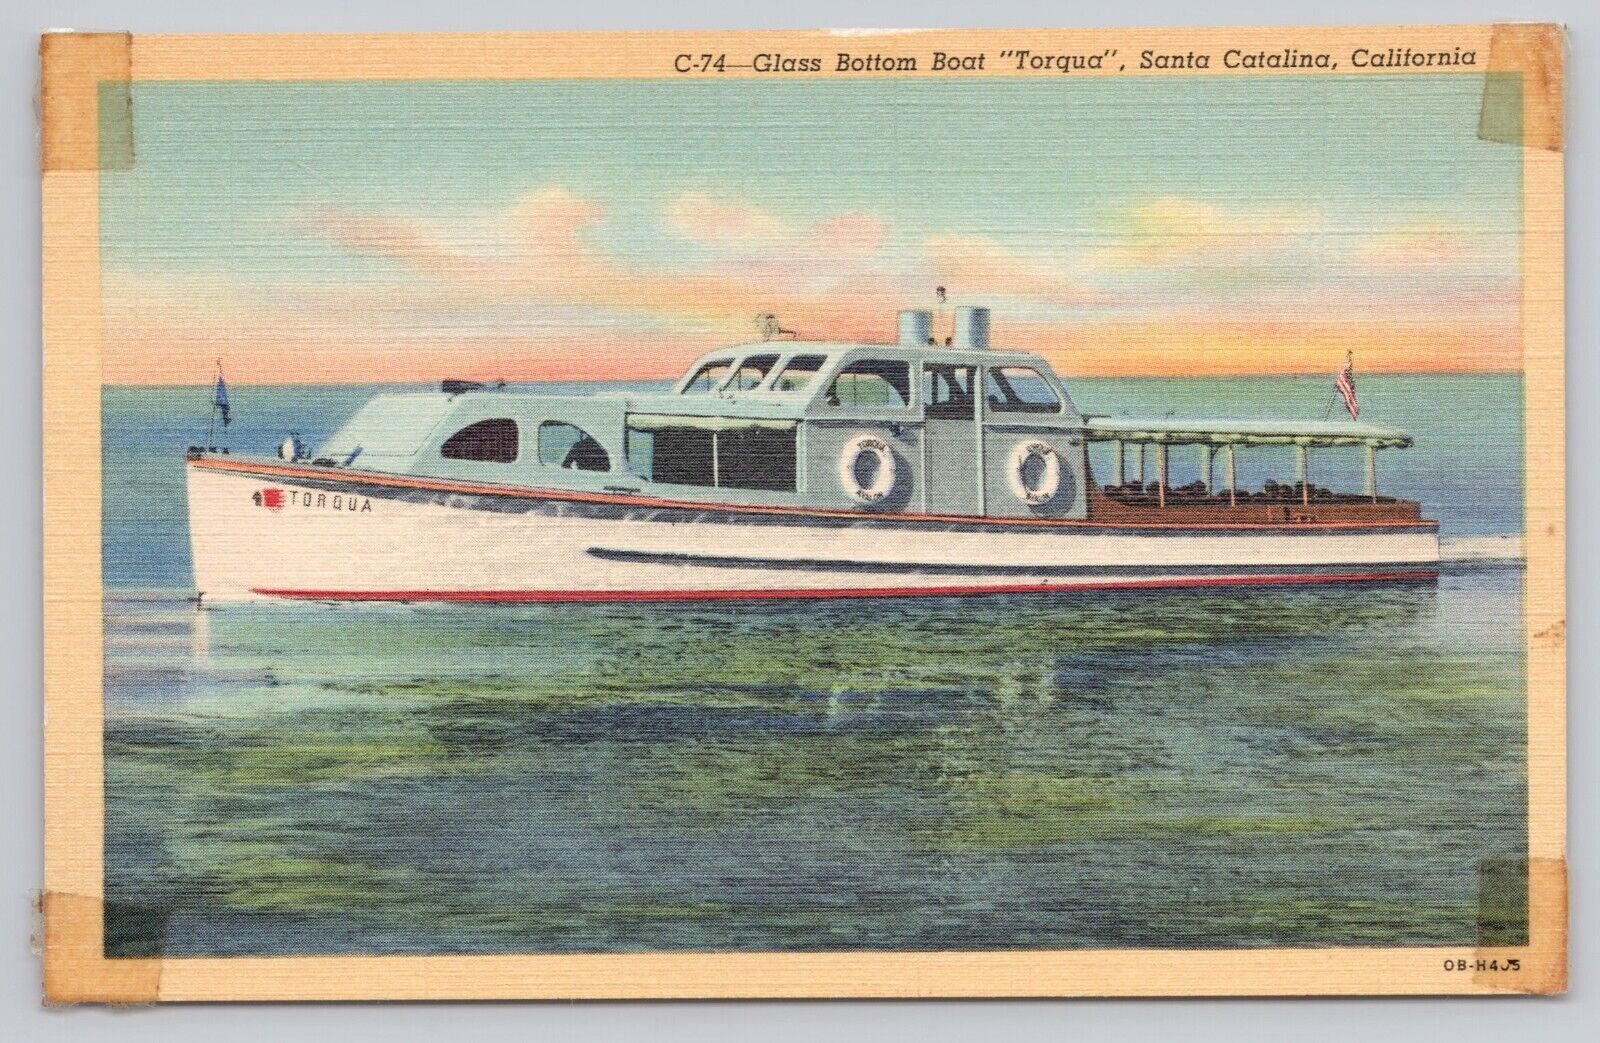 Santa Catalina Island California, Torqua Glass Bottom Tour Boat Vintage Postcard